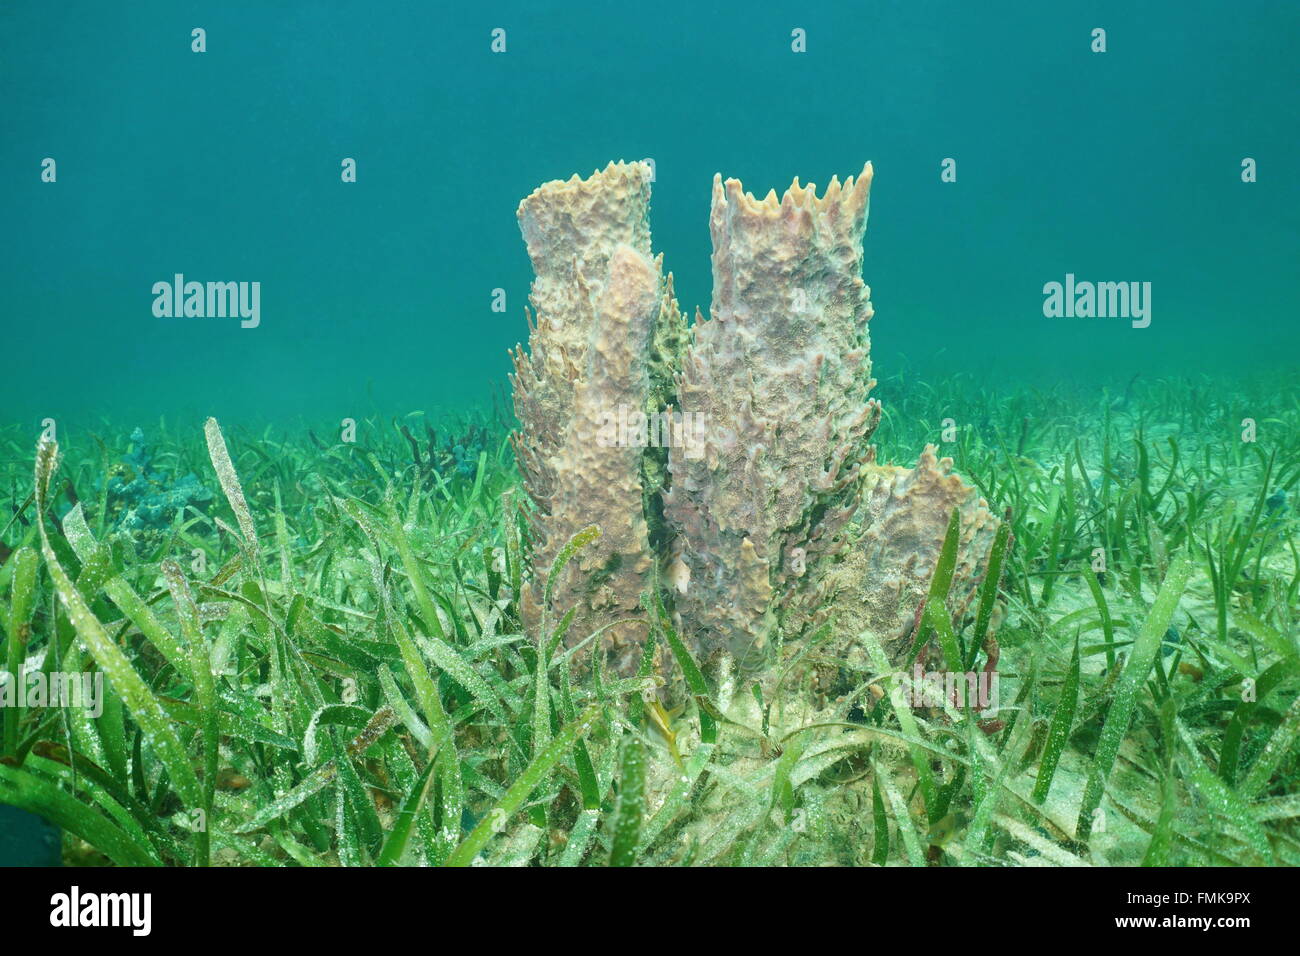 Underwater marine life, giant barrel sponge, Xestospongia muta, on grassy seabed, Caribbean sea Stock Photo